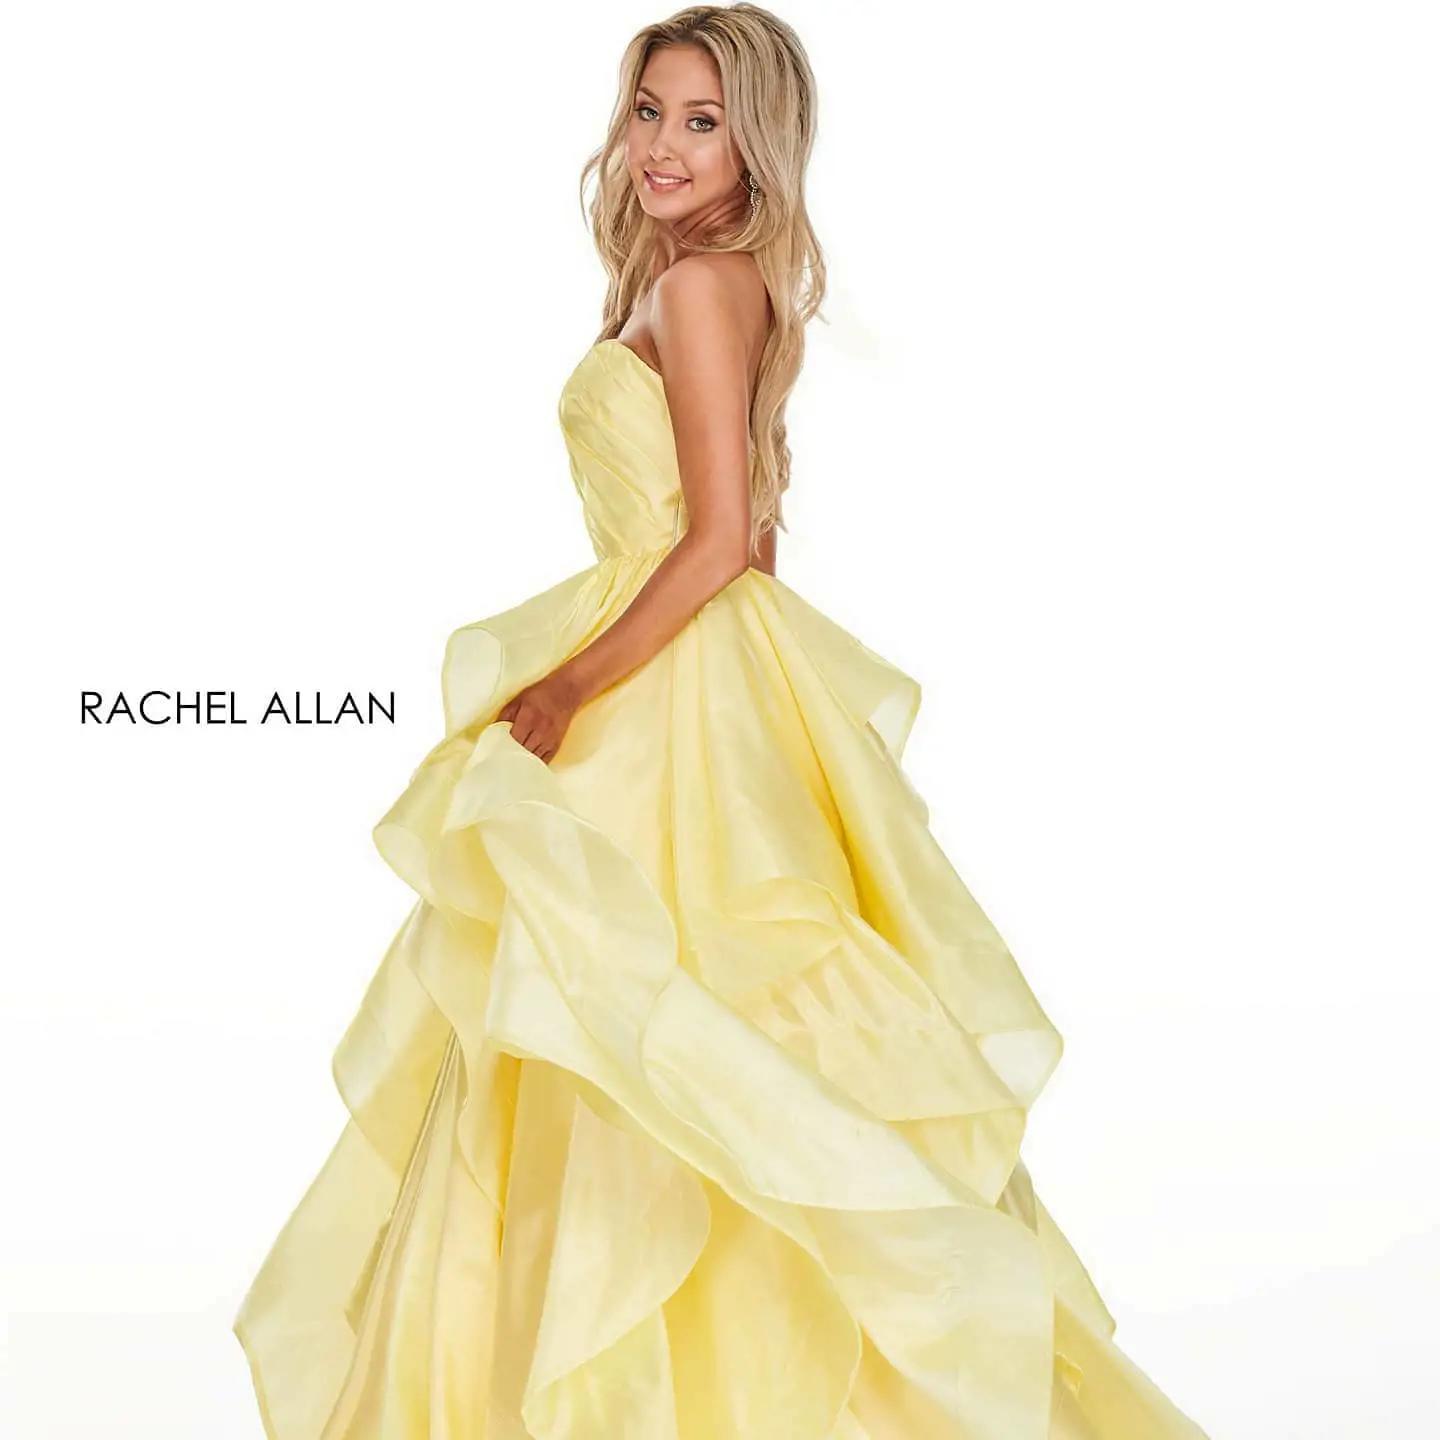 Model wearing a yellow dress